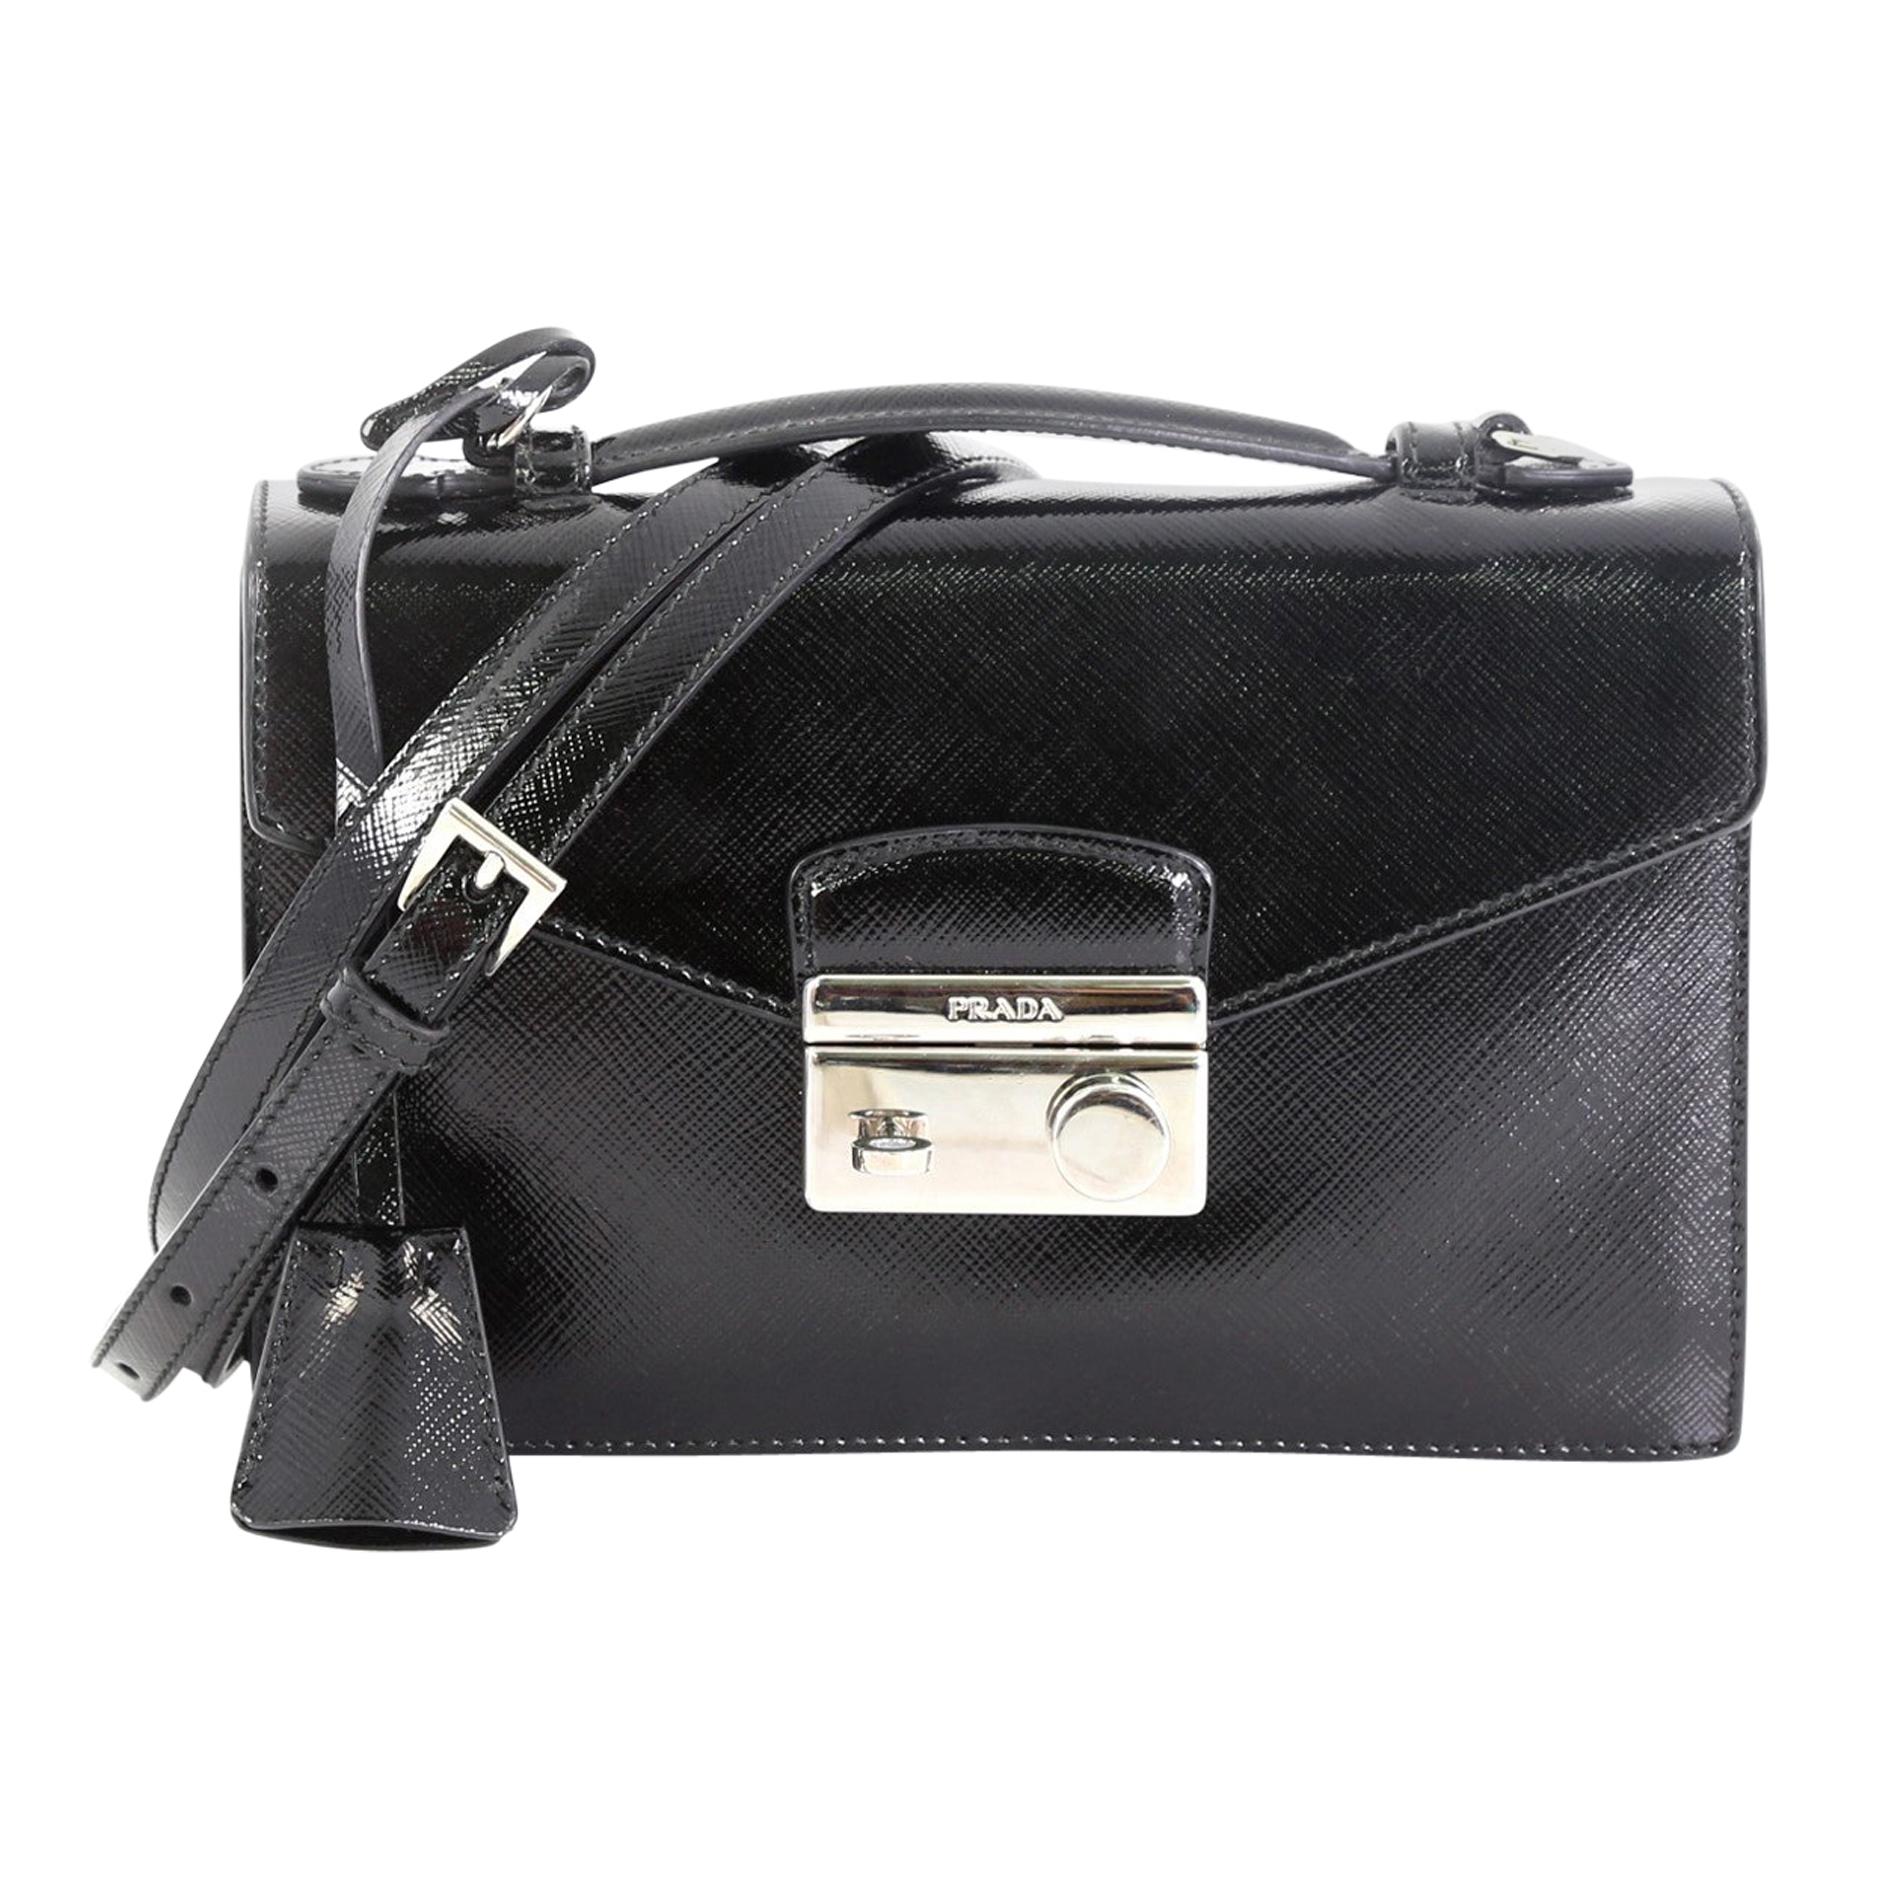 Prada Convertible Sound Bag Vernice Saffiano Leather Small